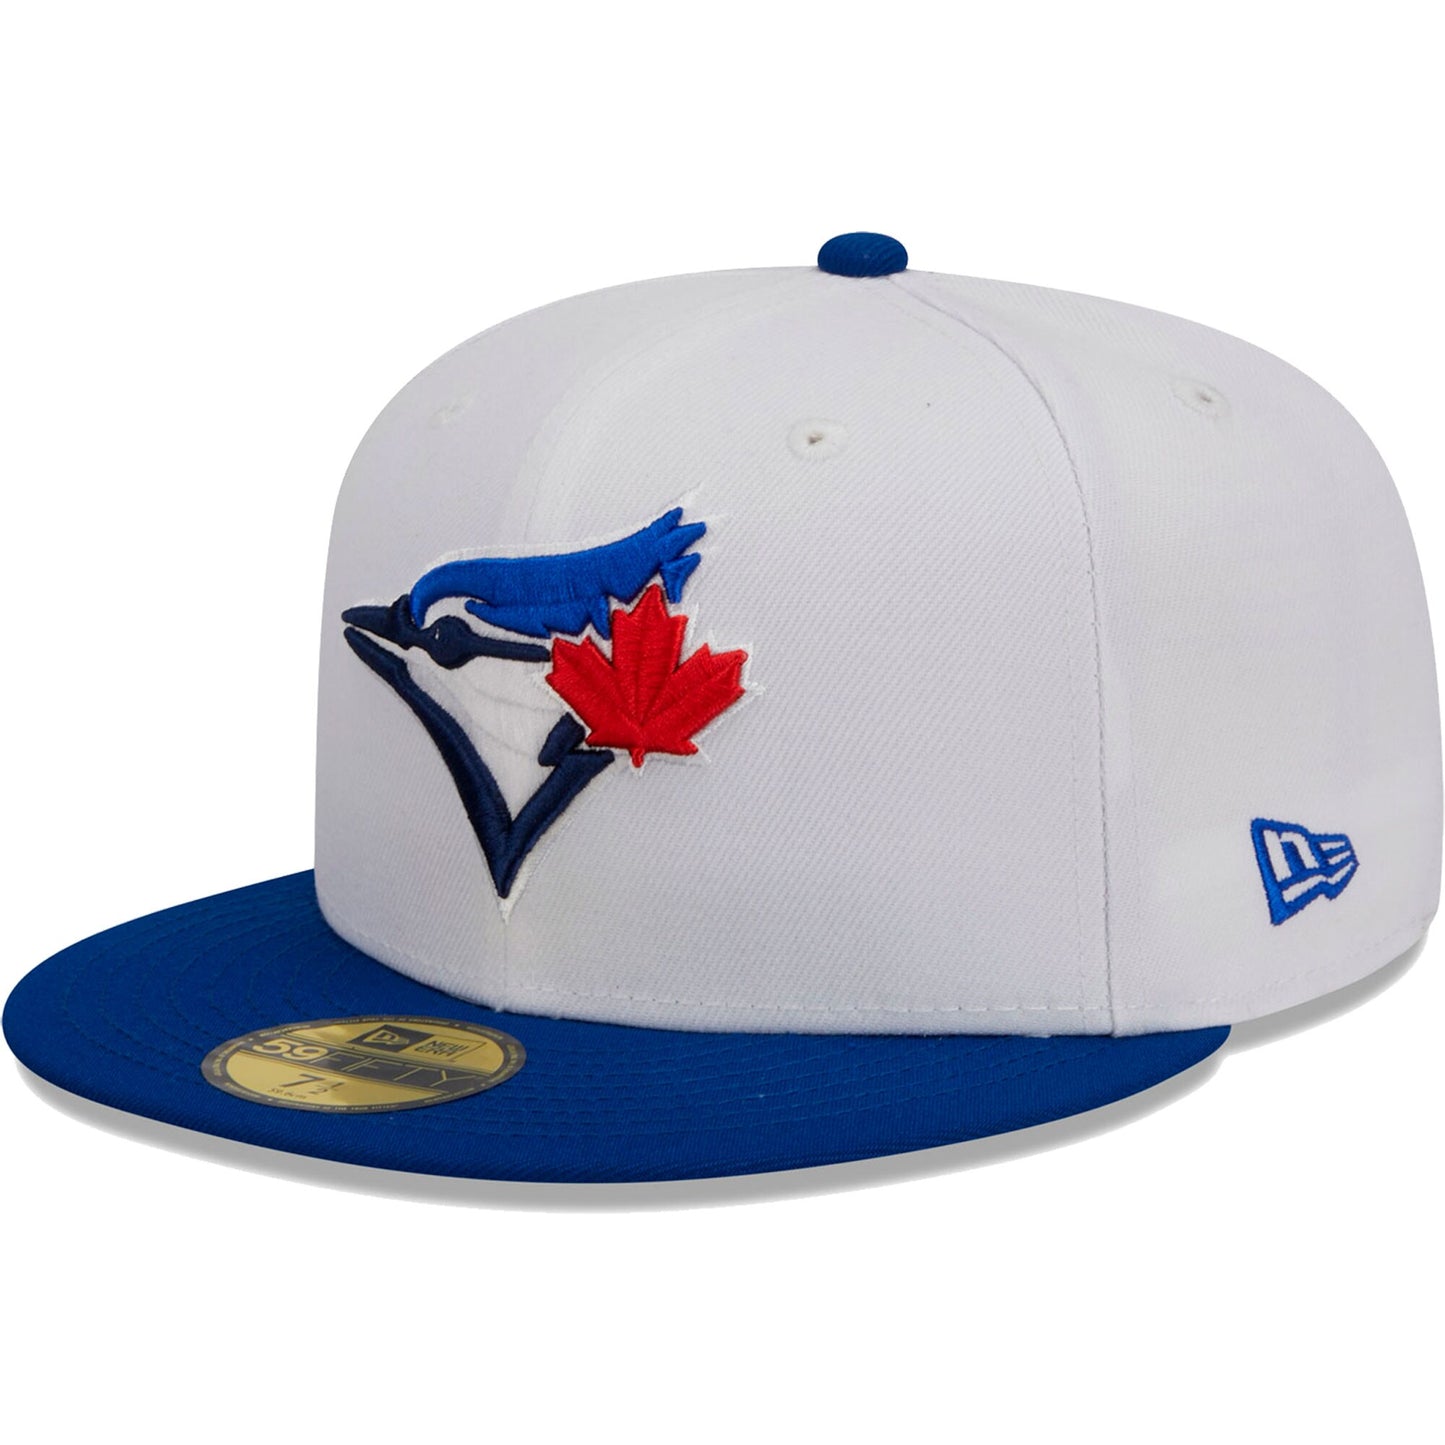 Toronto Blue Jays New Era Optic 59FIFTY Fitted Hat - White/Royal